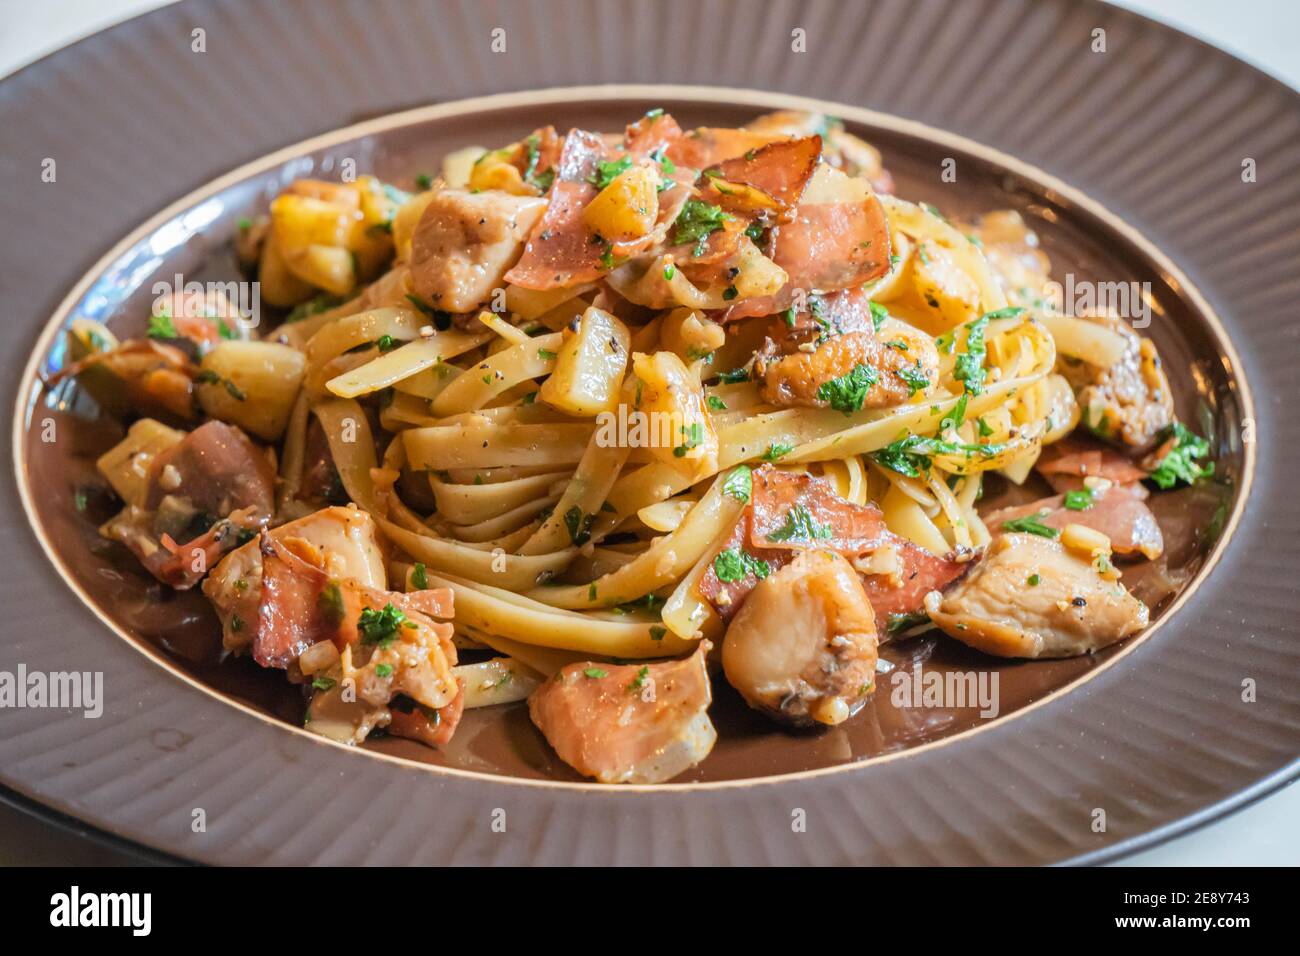 Spaghetti Carbonara With Bacon And Cheese. Stock Photo